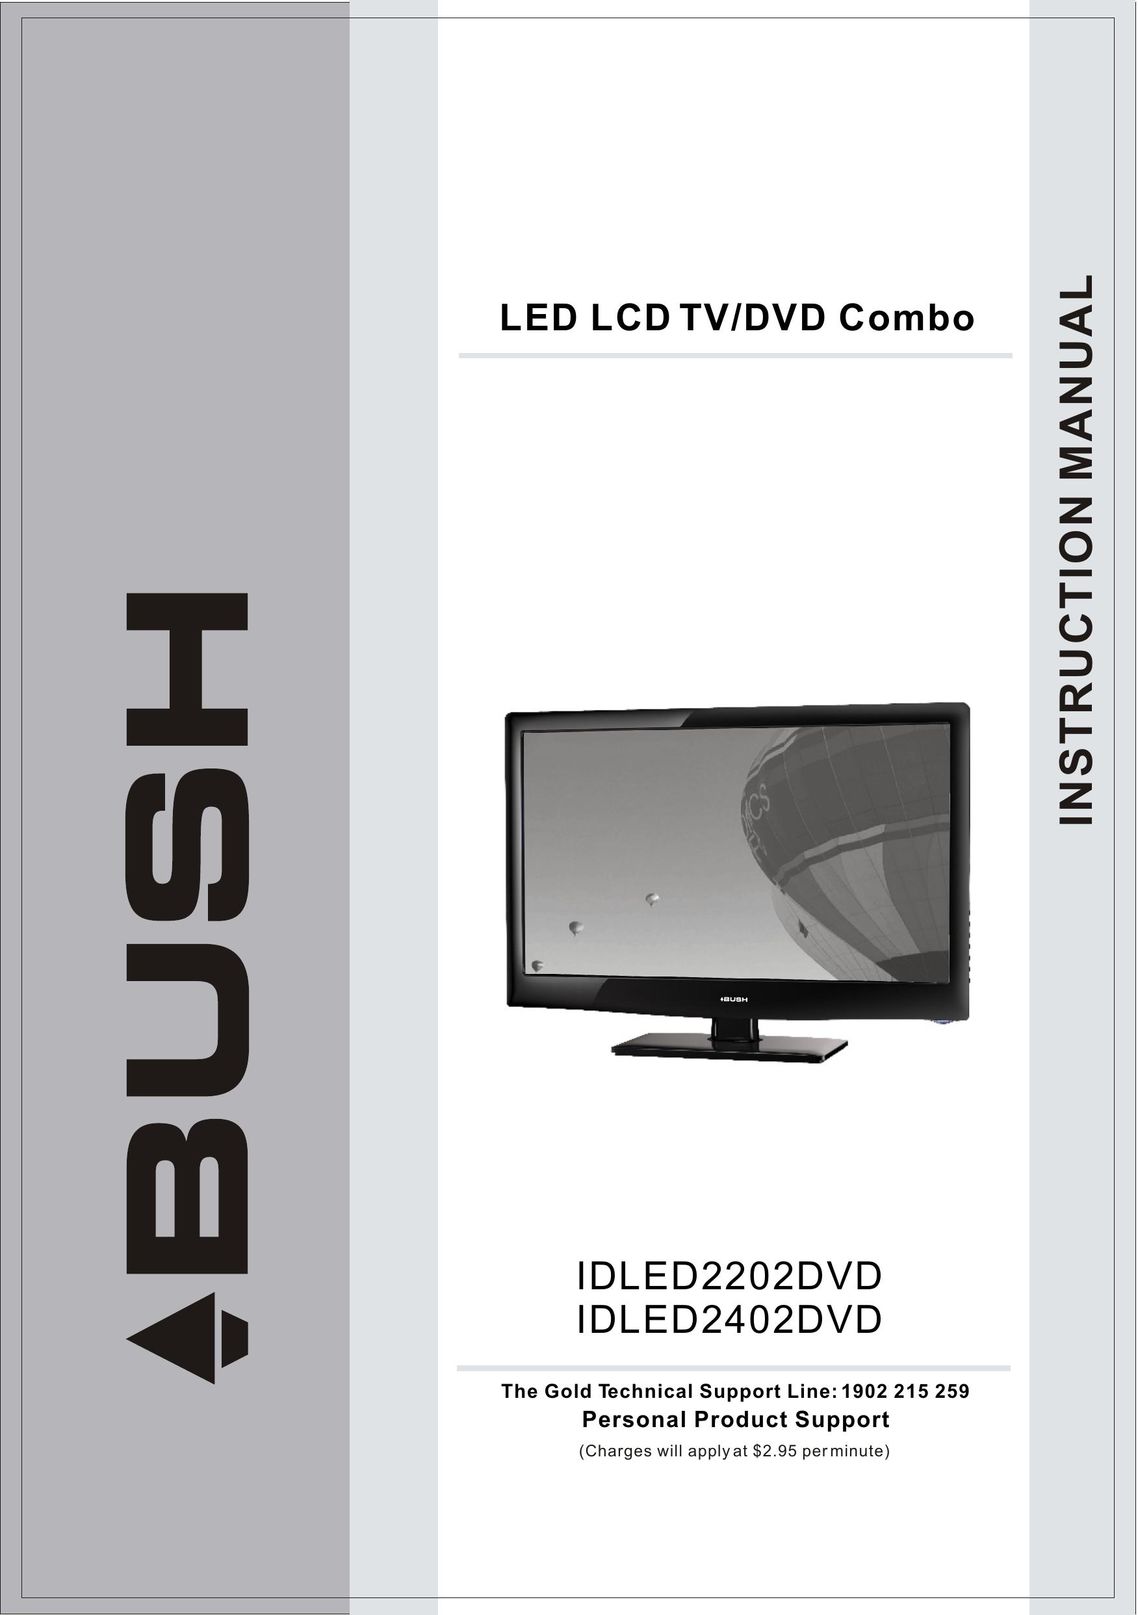 BUSH IDLED2202DVD Flat Panel Television User Manual